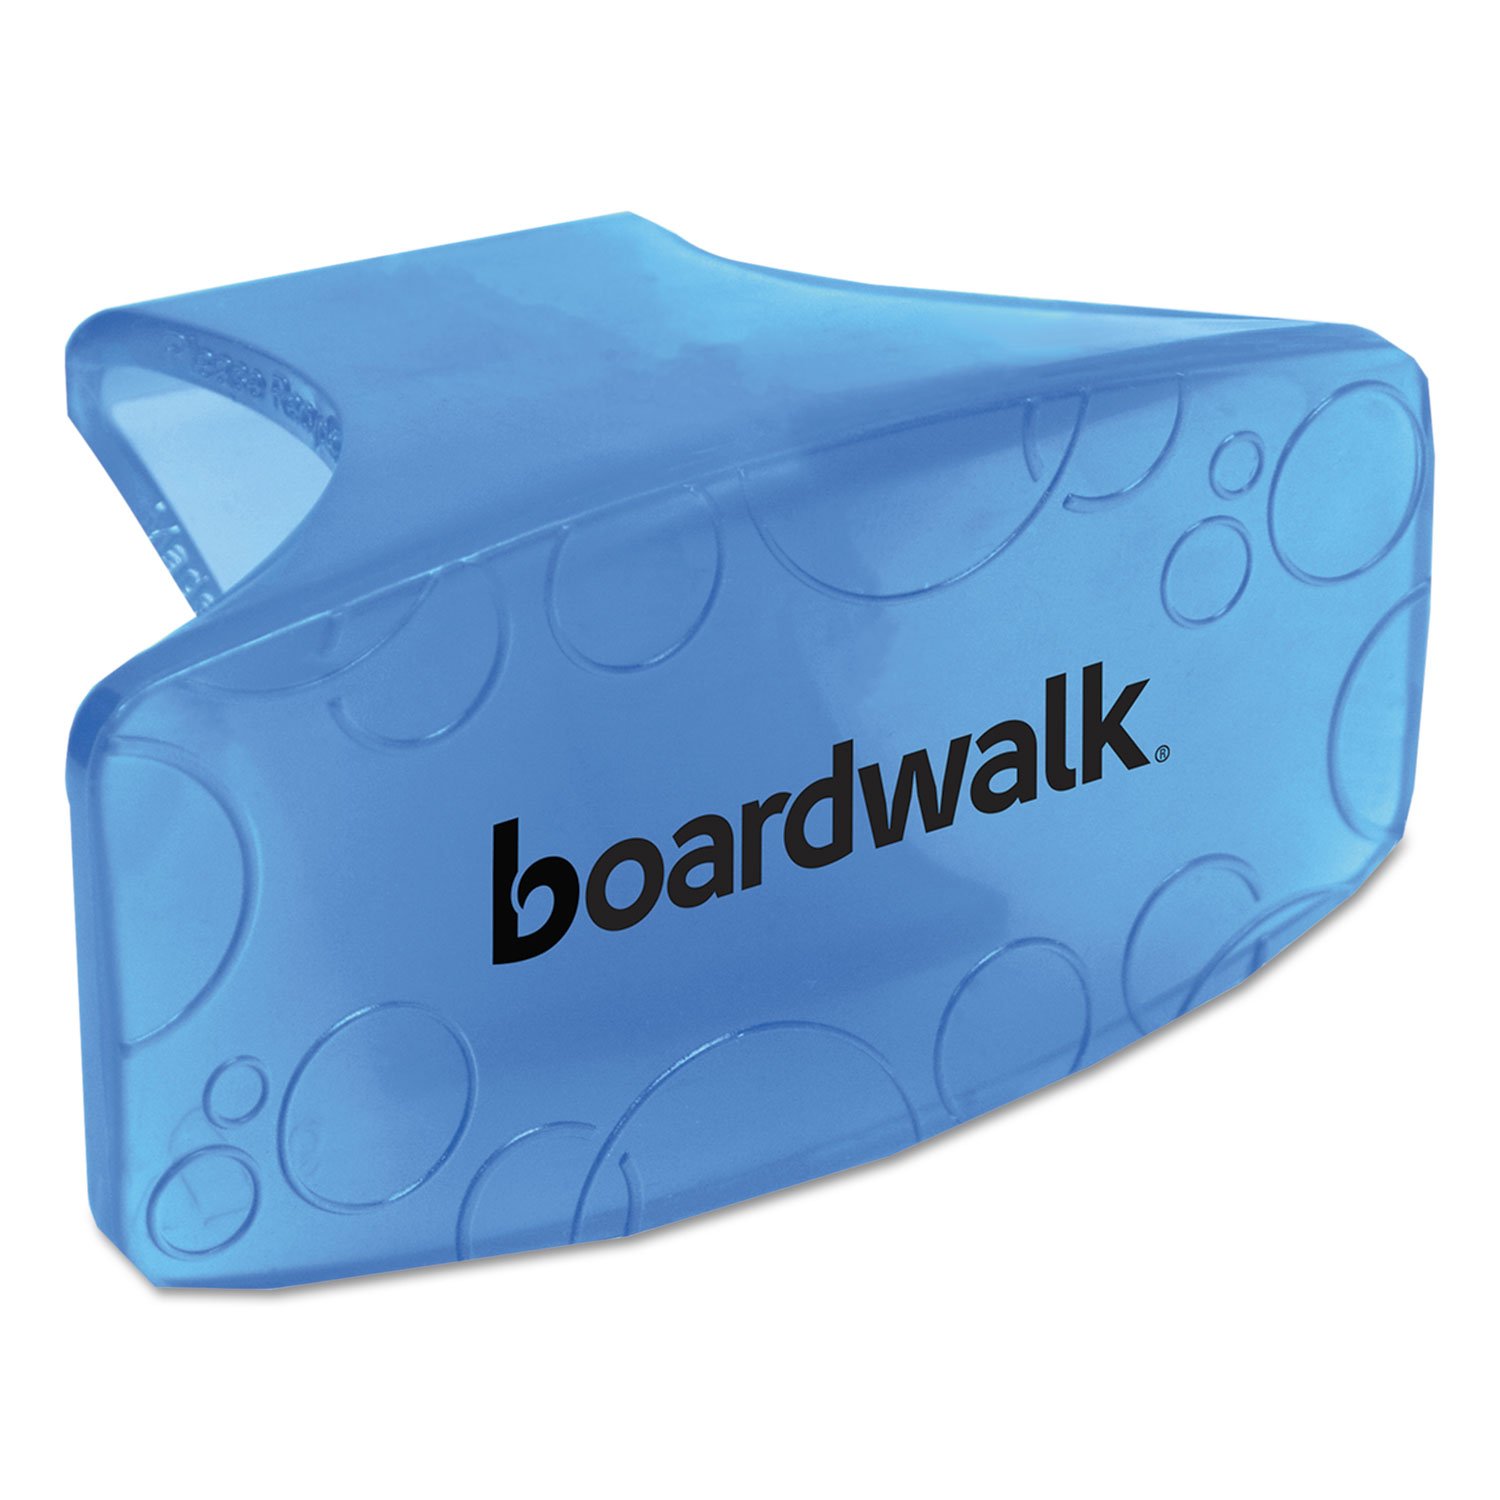 Boardwalk Curvesapct Curve Air Freshener, Spiced Apple, Red, 10/Box, 6 Boxes/Carton